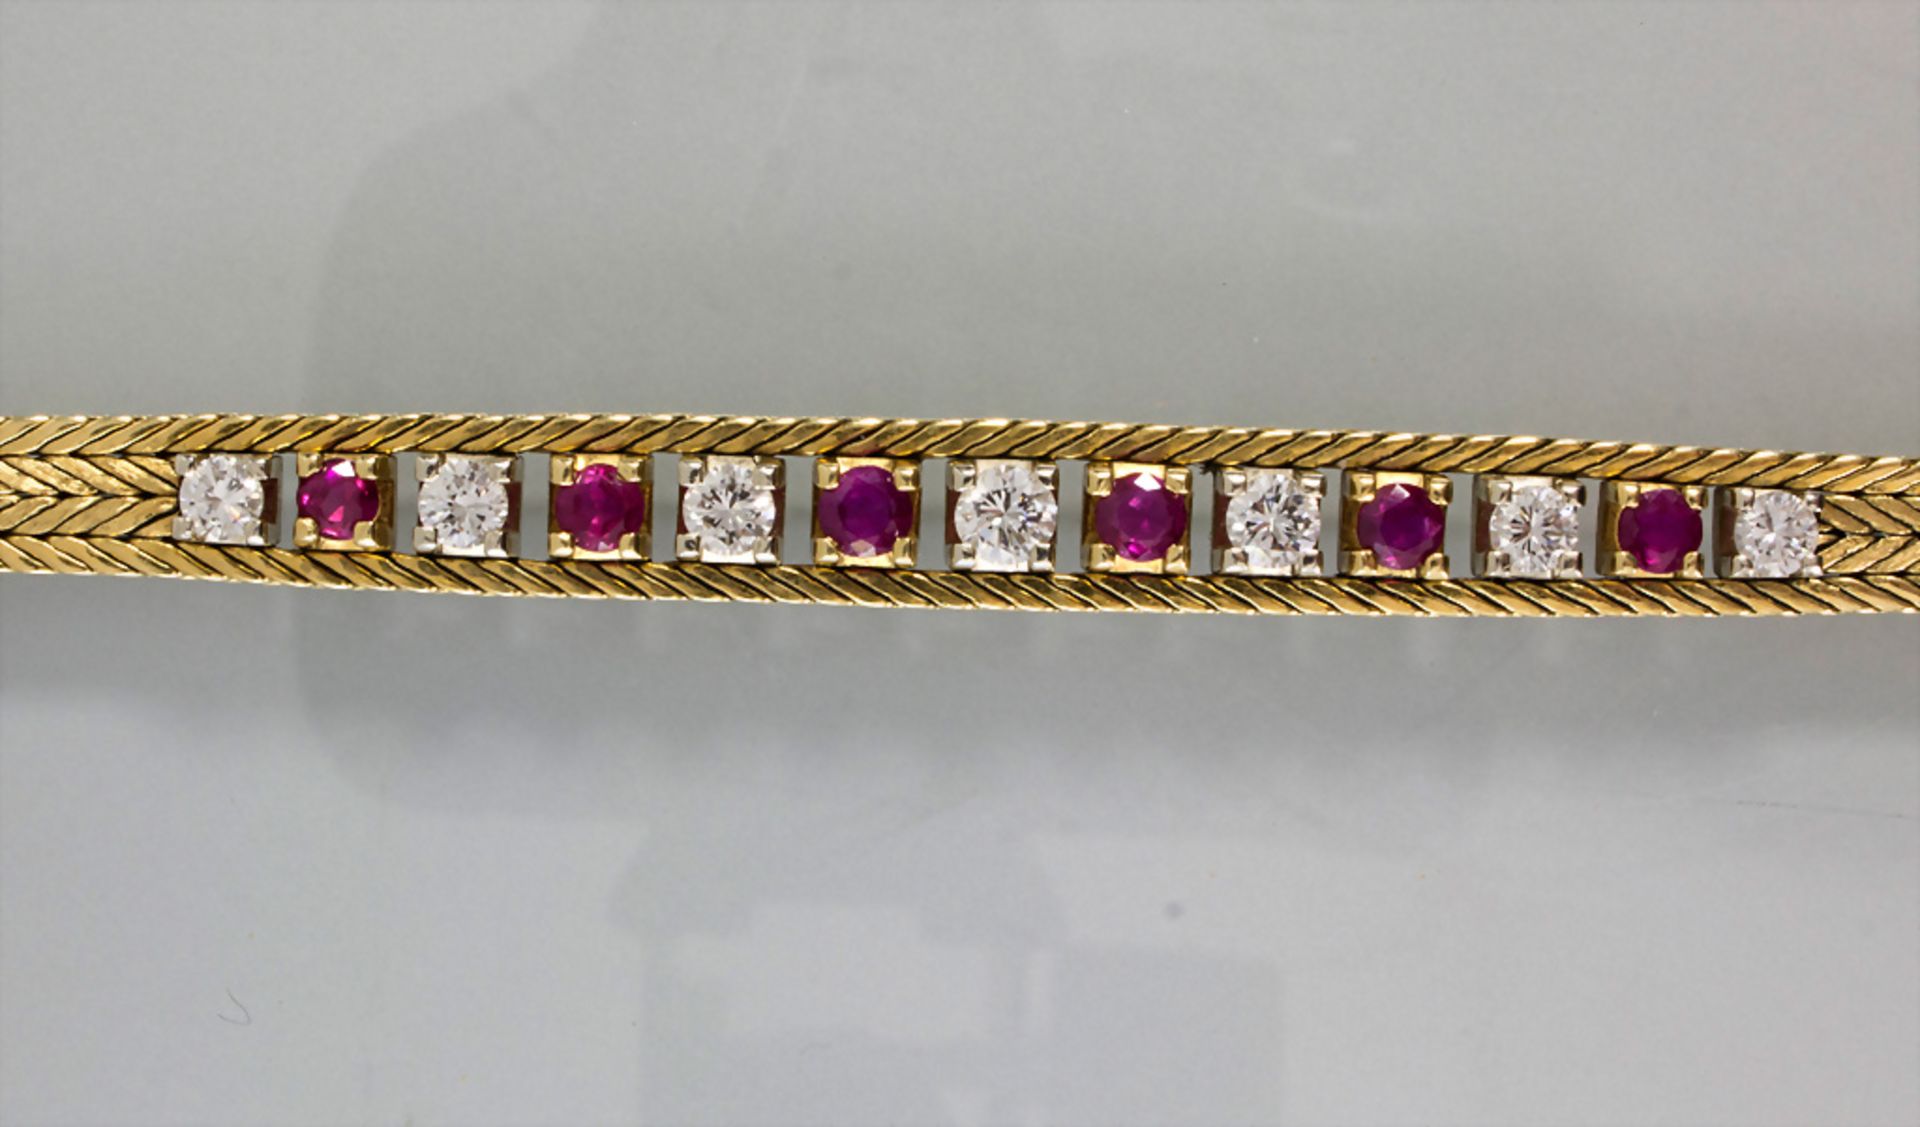 Goldarmband mit Diamanten und Rubinen / An 18k gold bracelet with diamonds and rubies